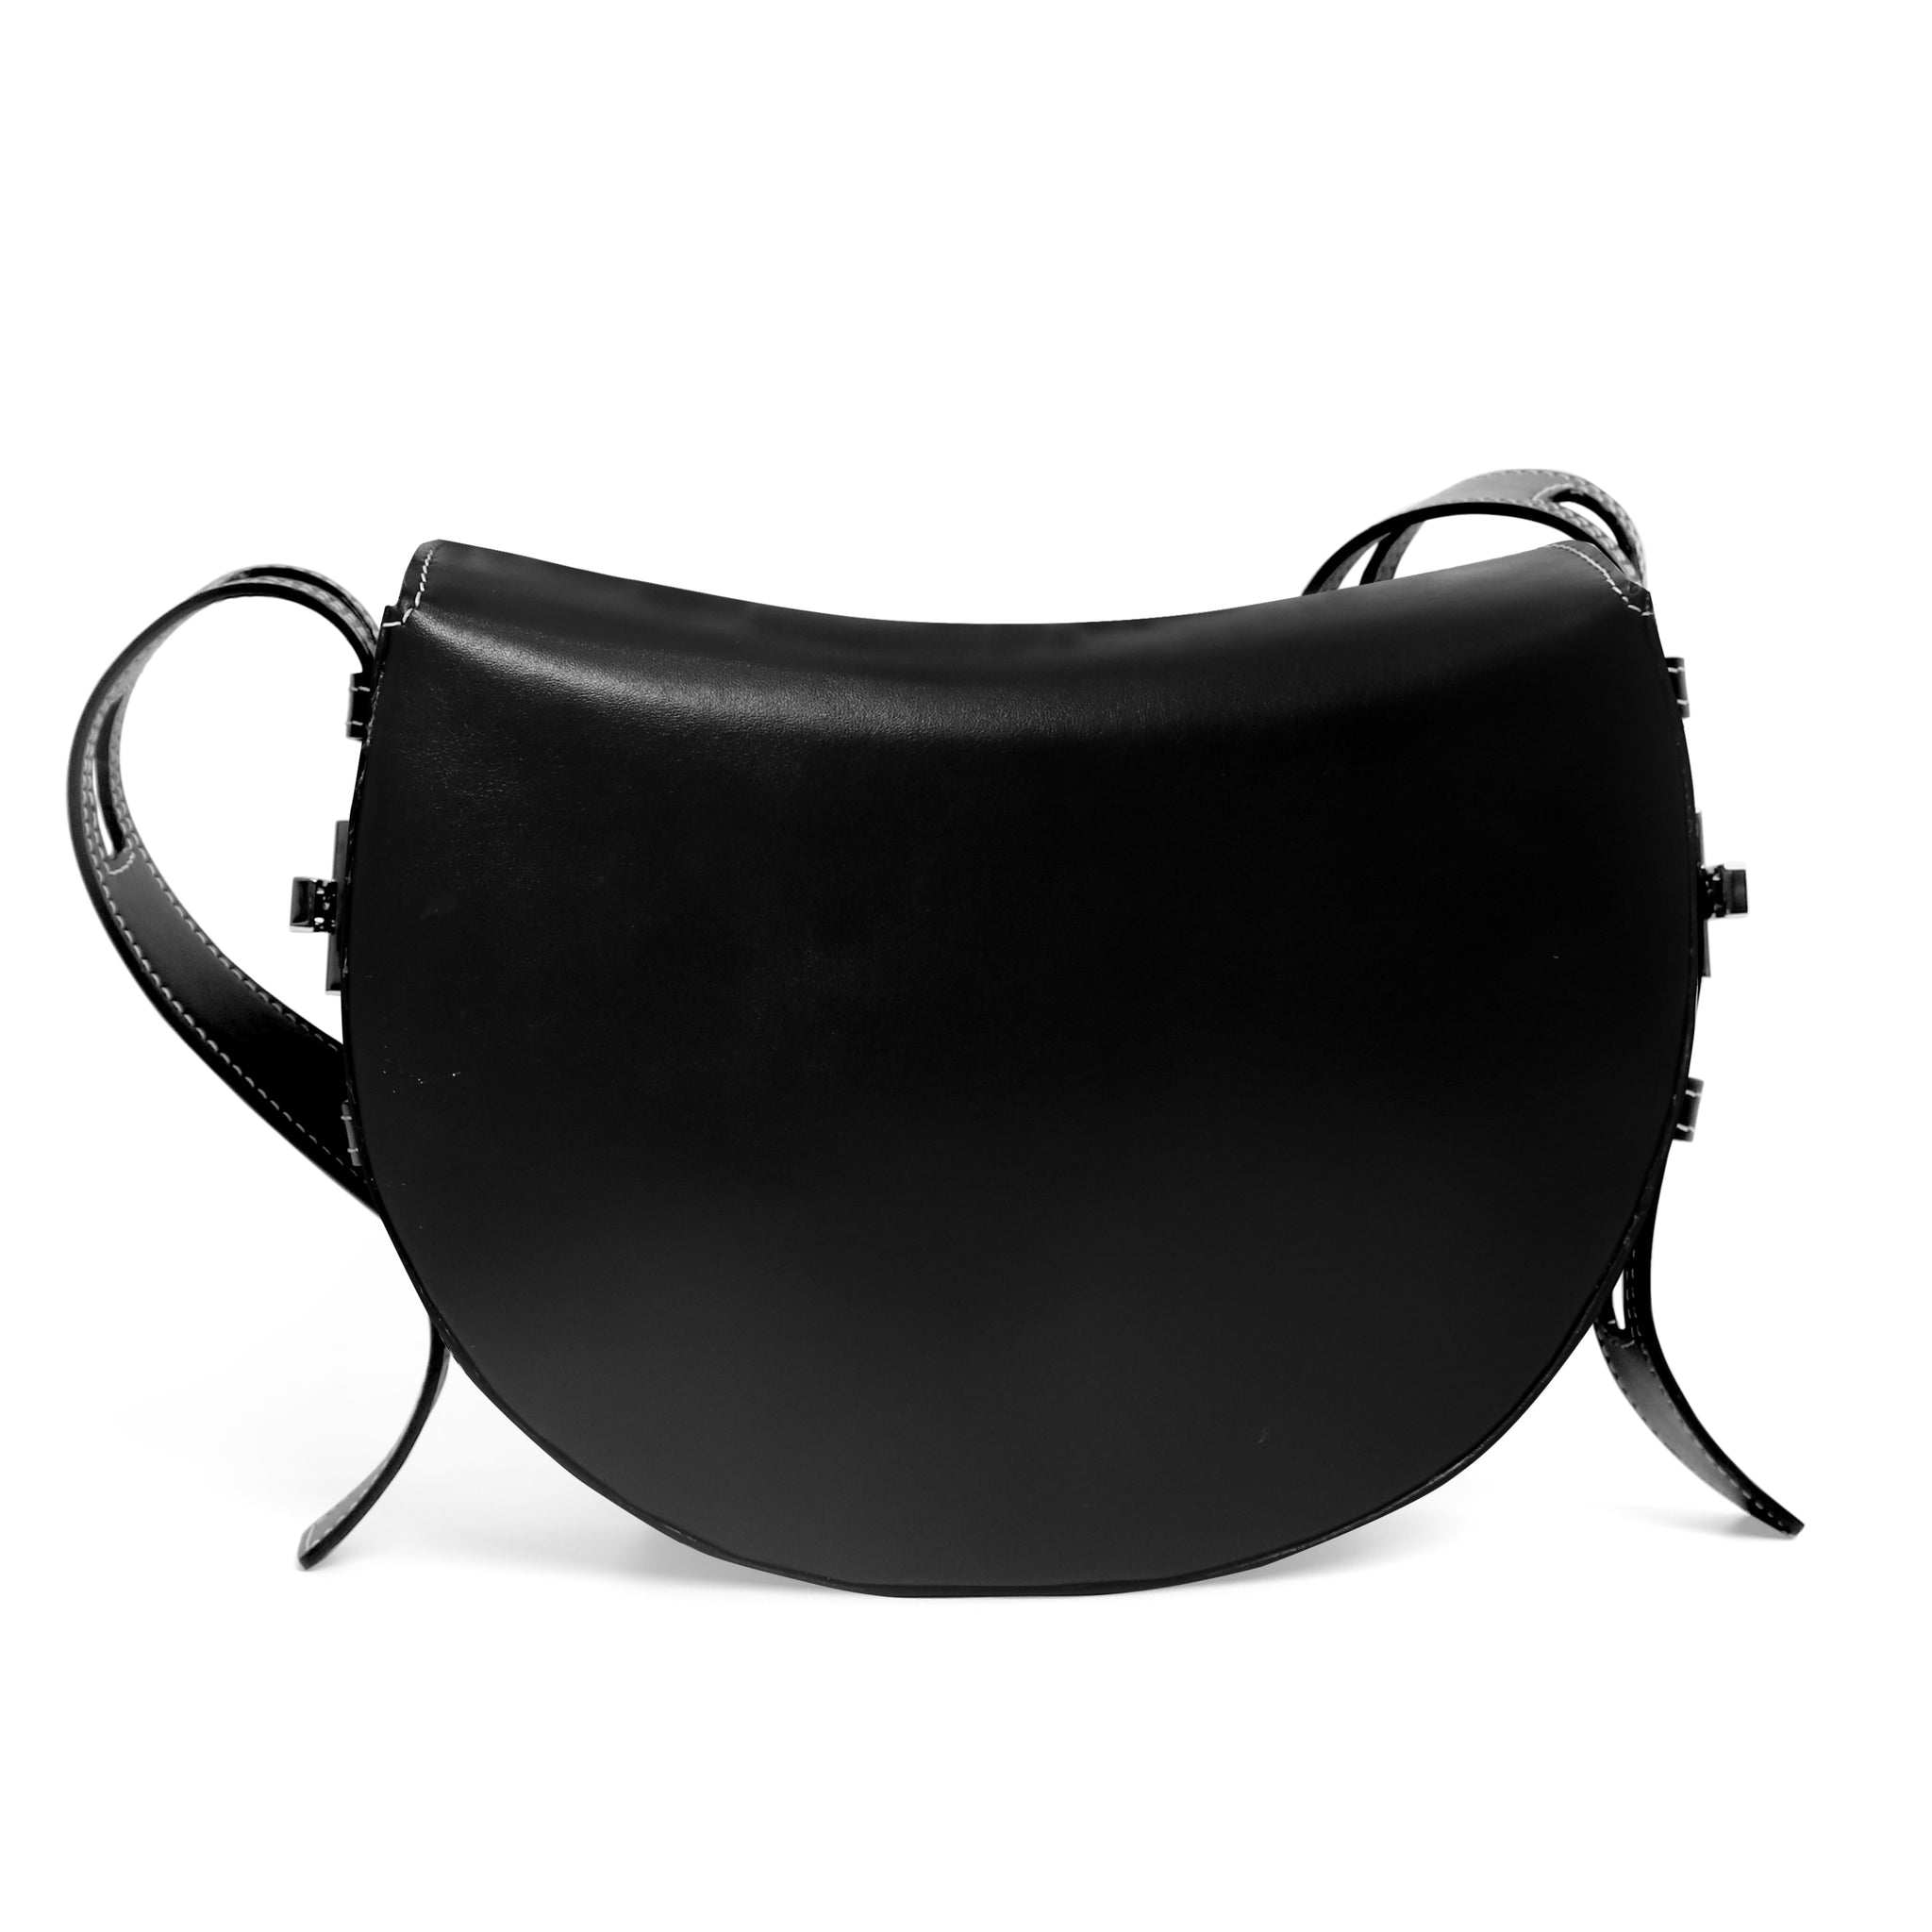 Shaker Twist Bag in black, back view